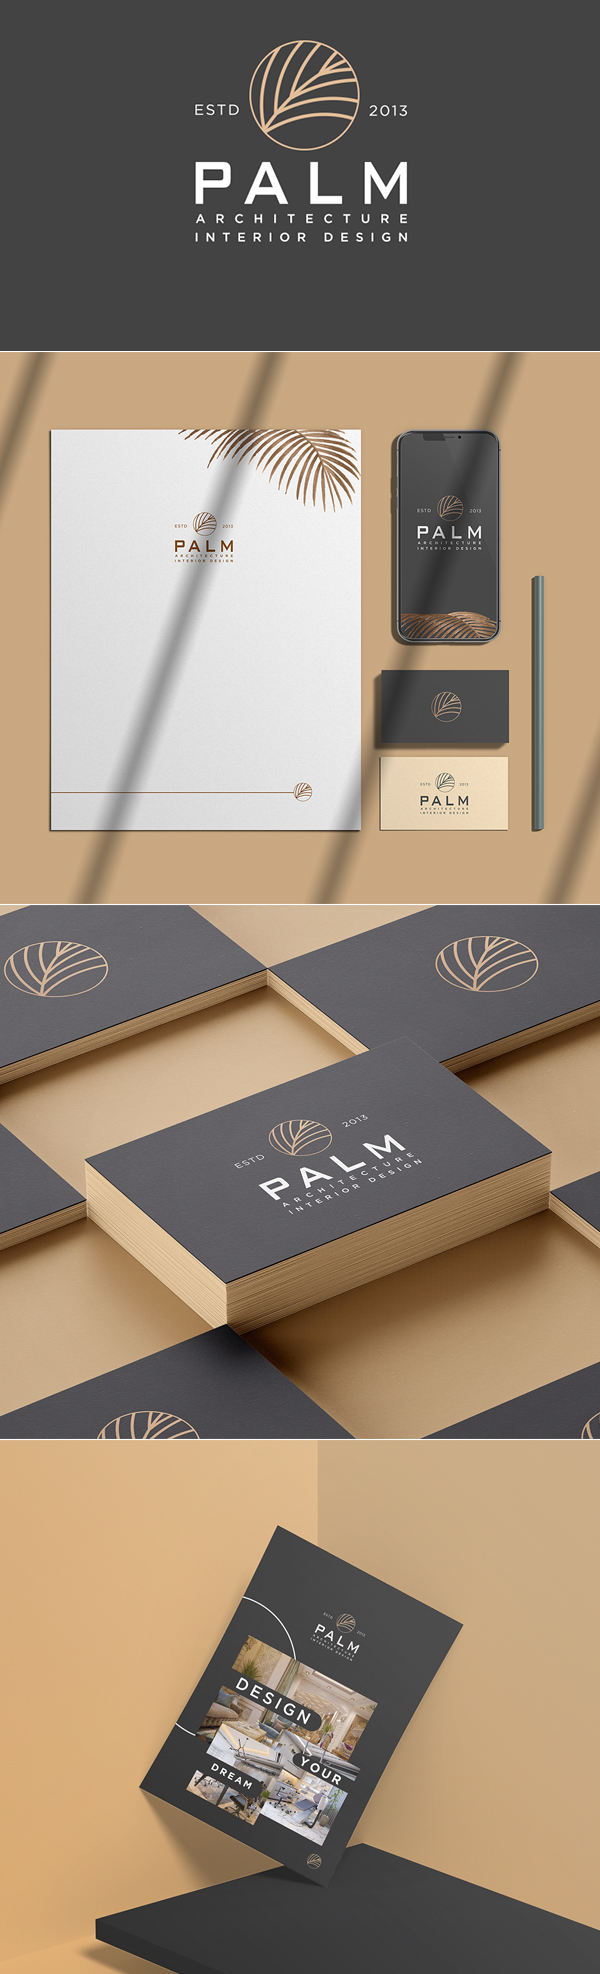 Palm Interior Design Branding by Abdelrahman Khaled